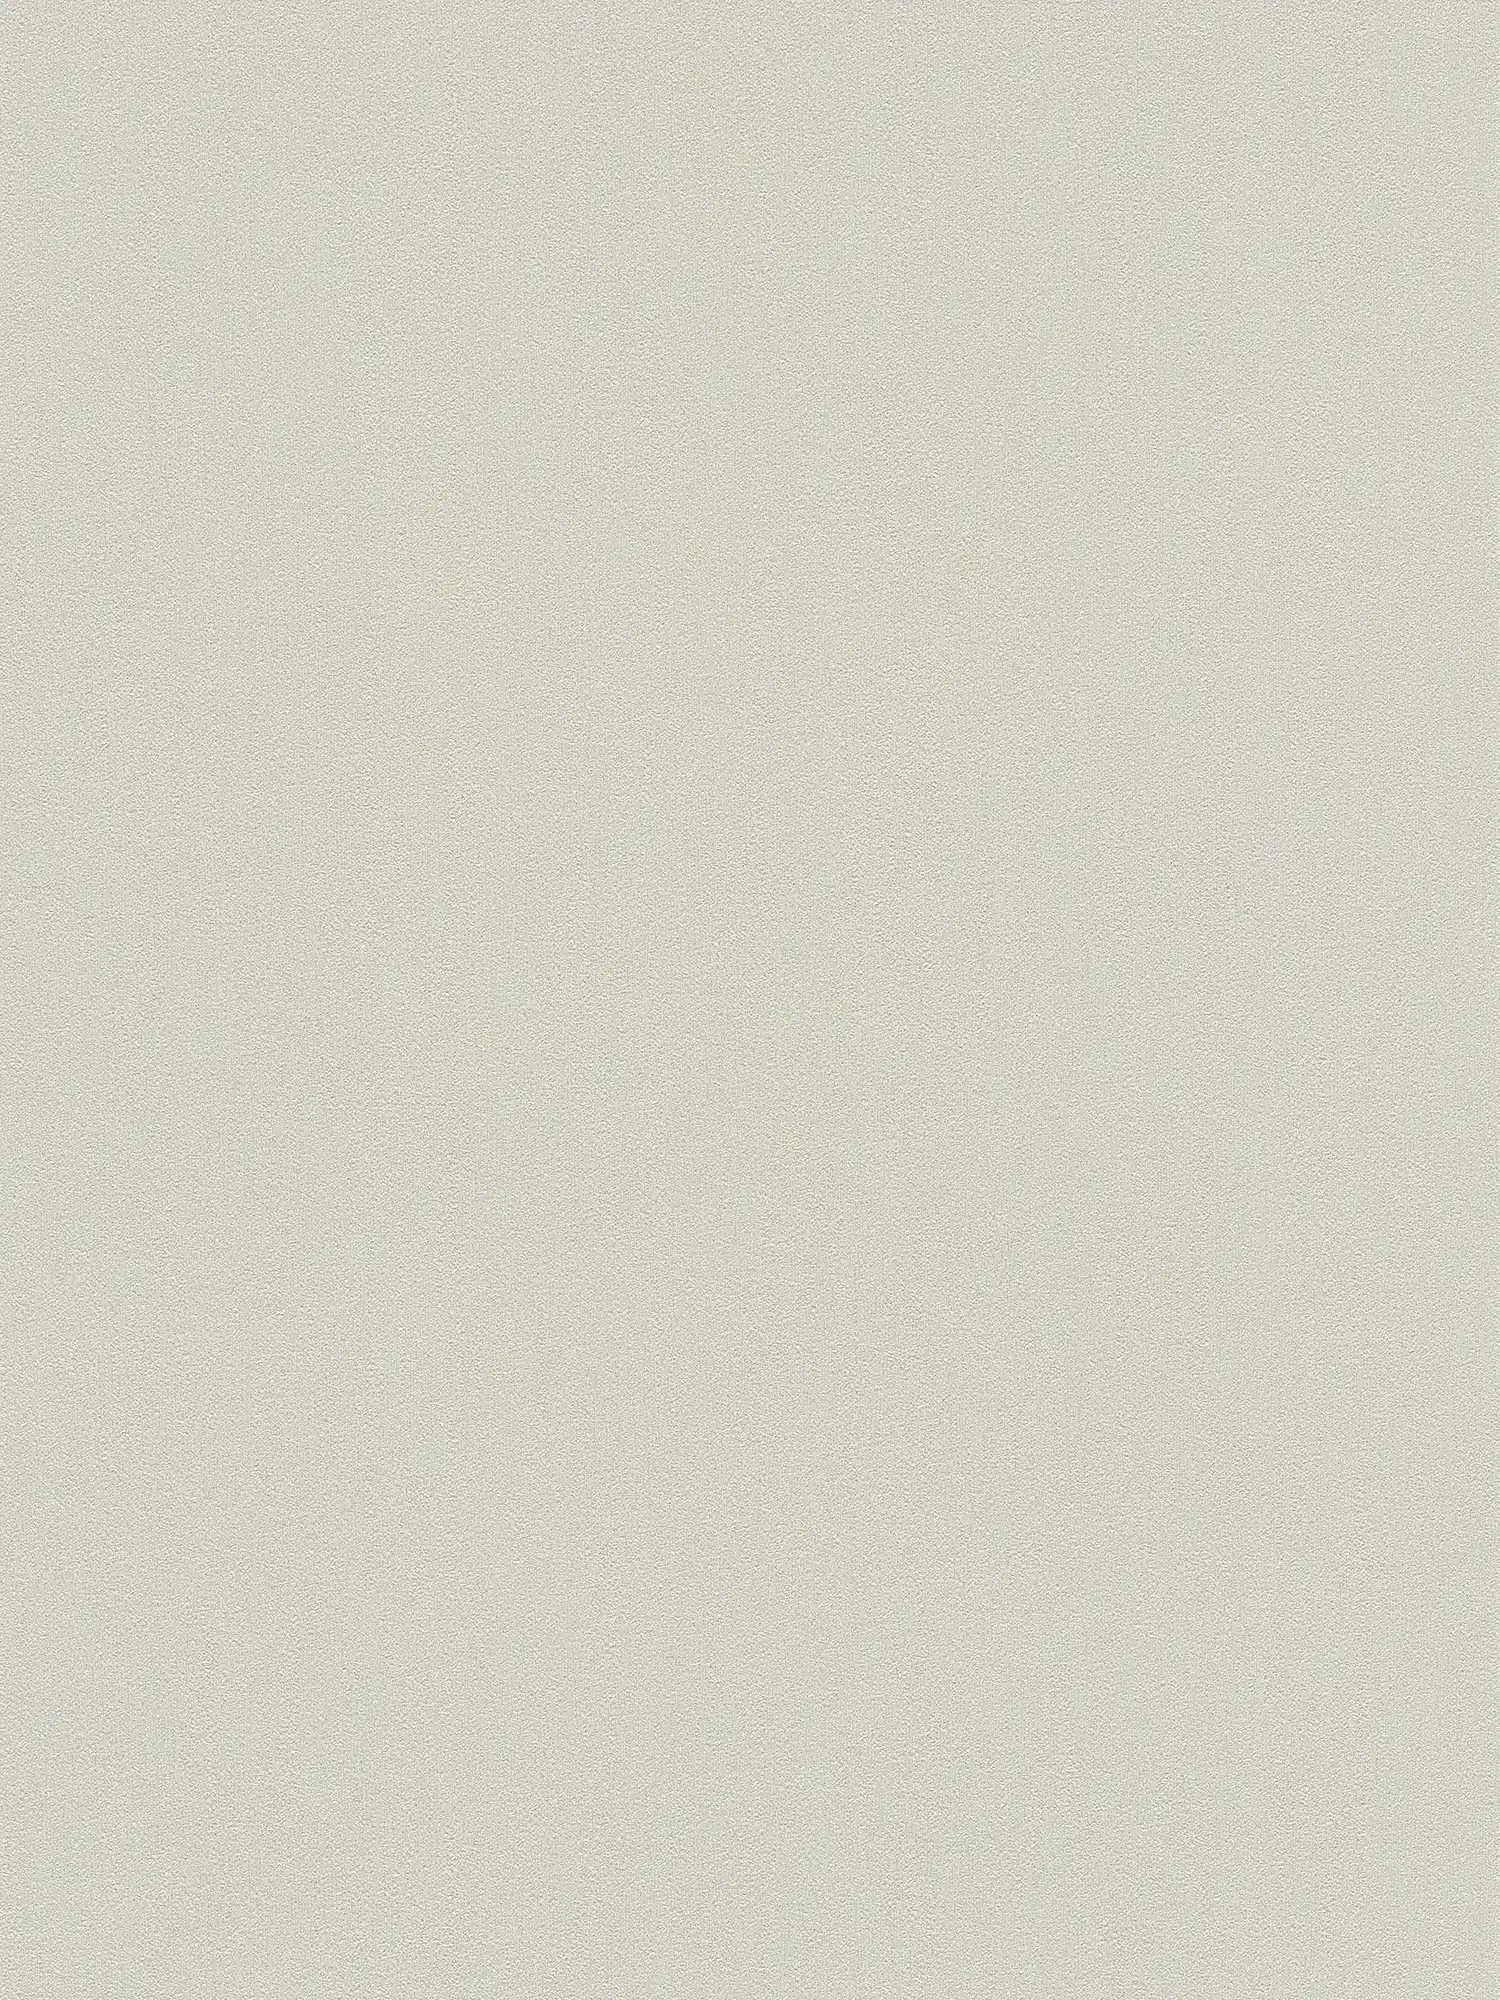 Karl LAGERFELD non-woven wallpaper plain & texture - grey
